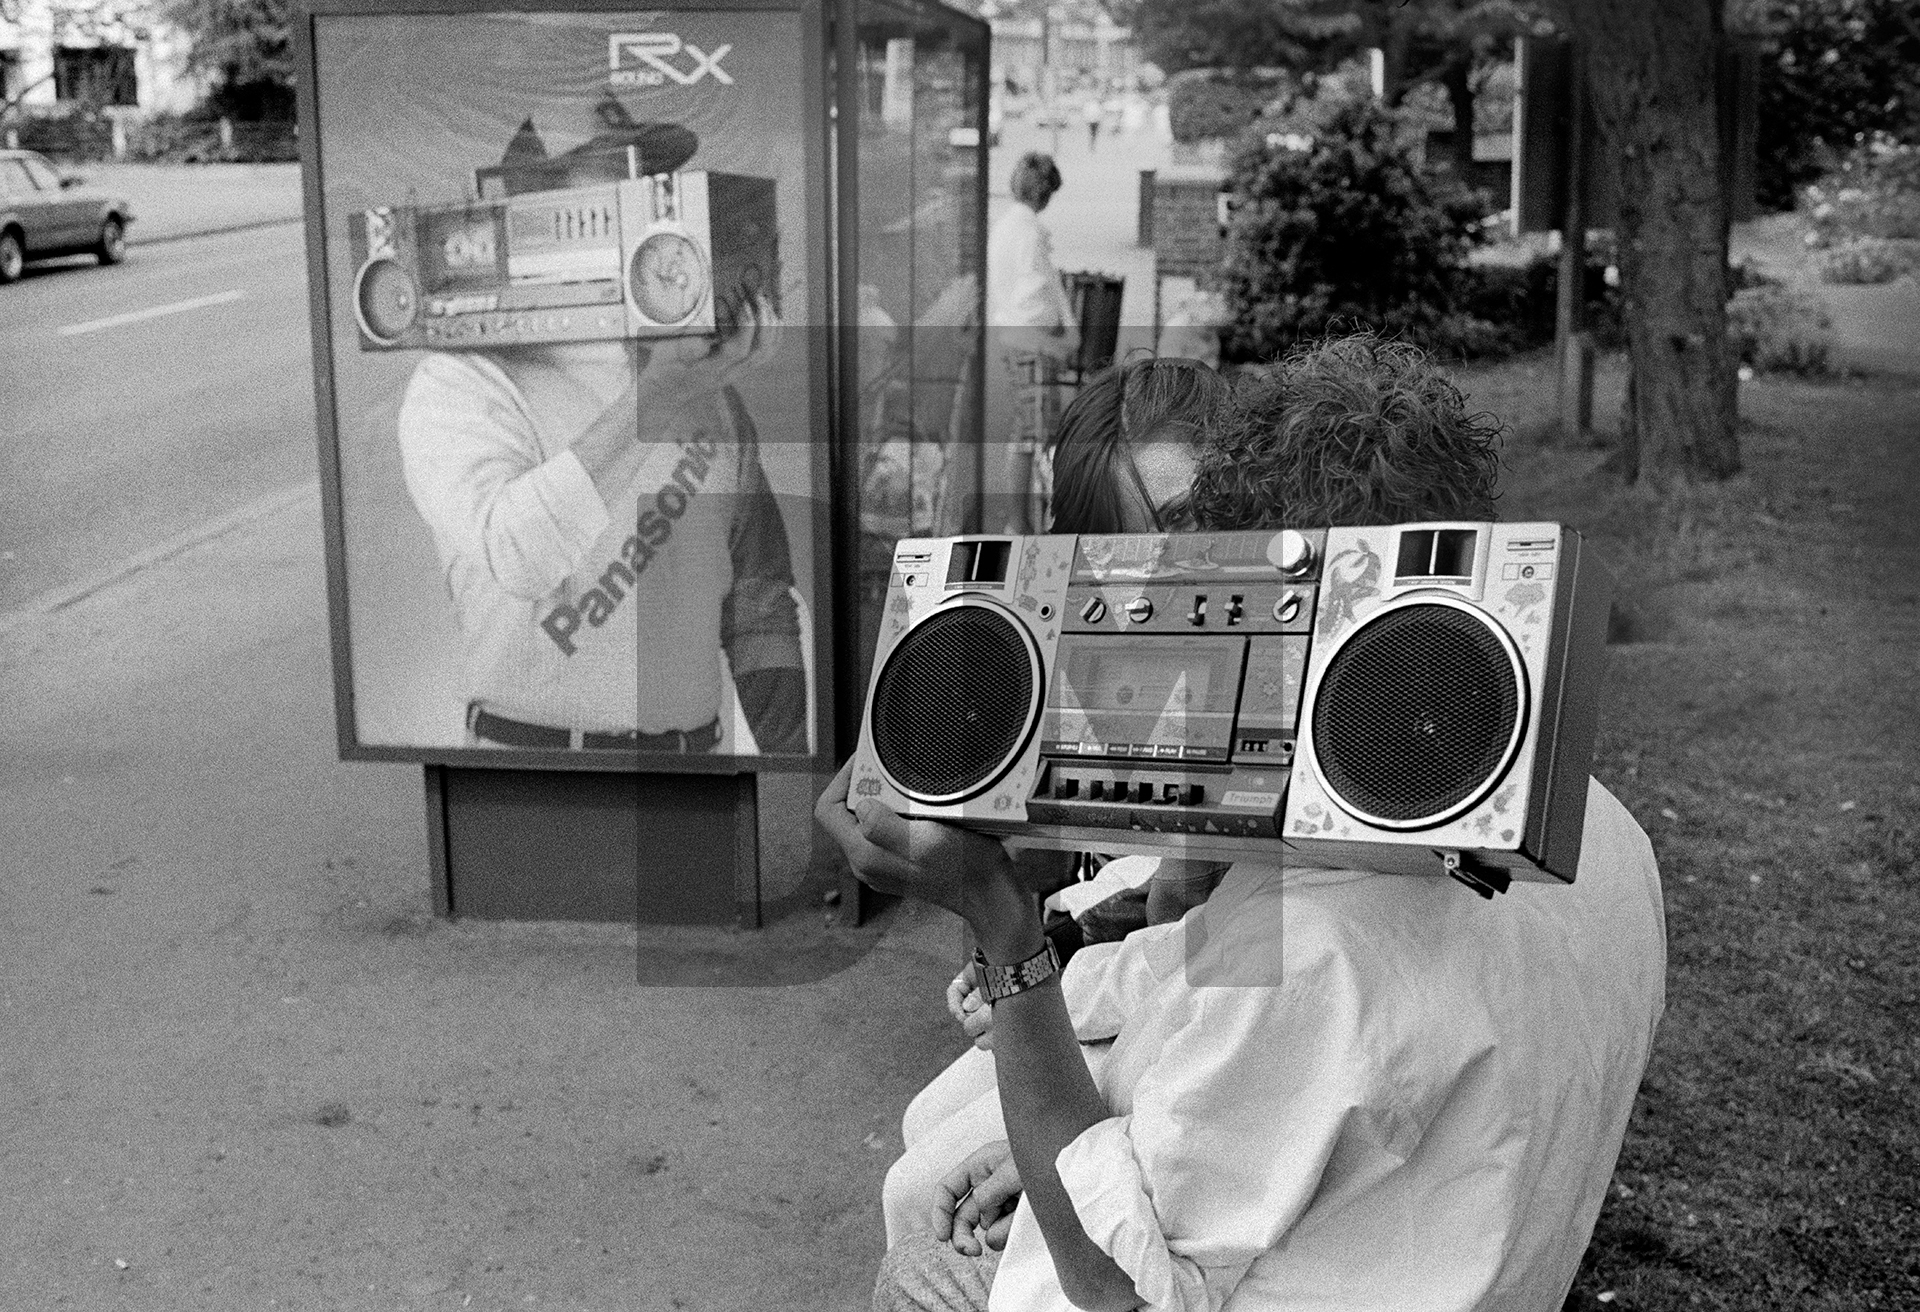 Ghetto blaster, Bromley. July 1985 by Daniel Meadows